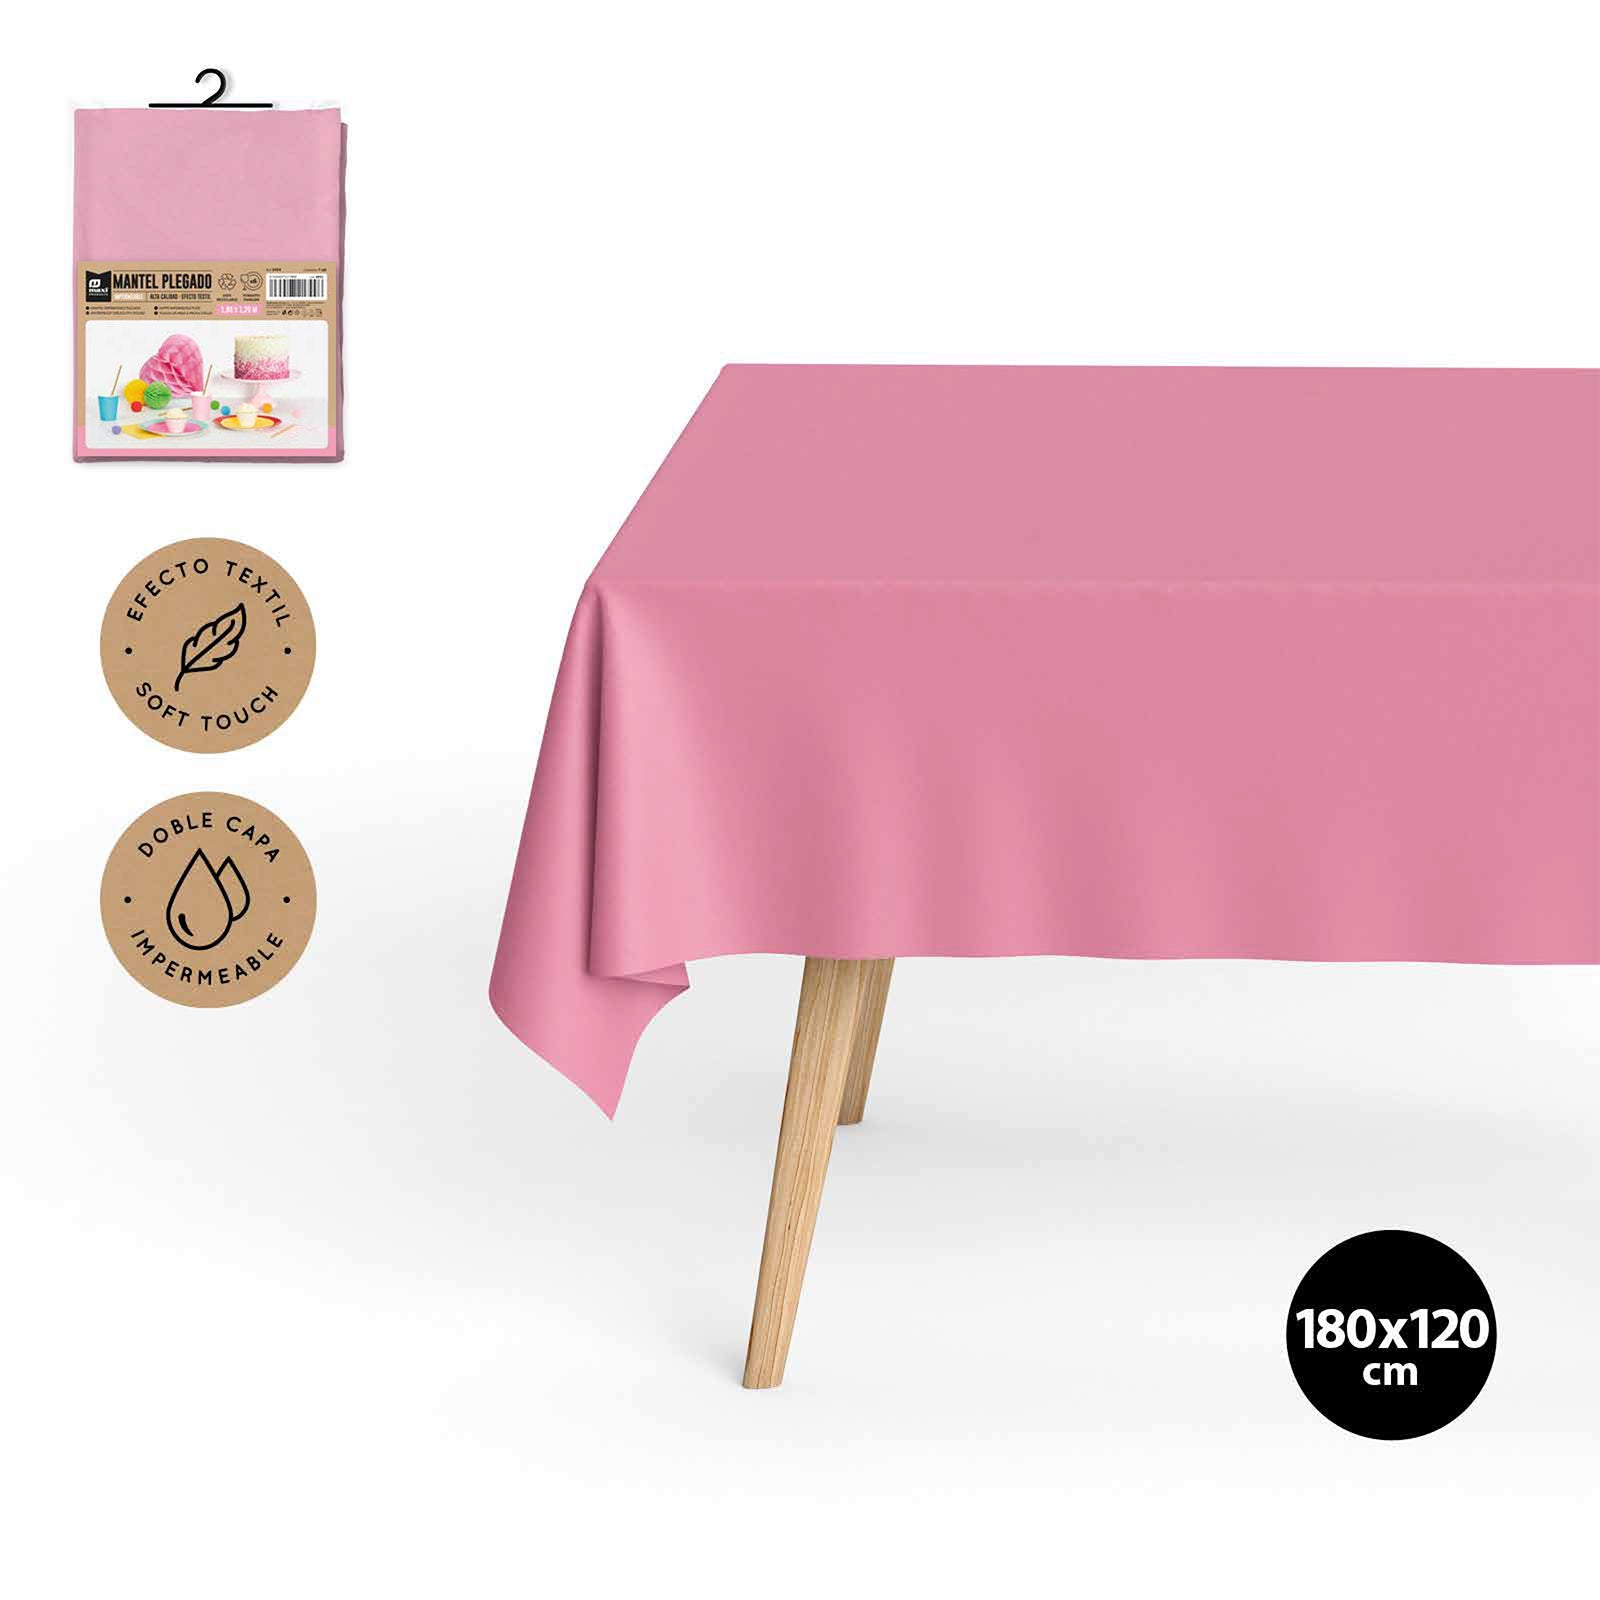 Waterproof folding tablecloth 1.20 x 1.80 m pastel